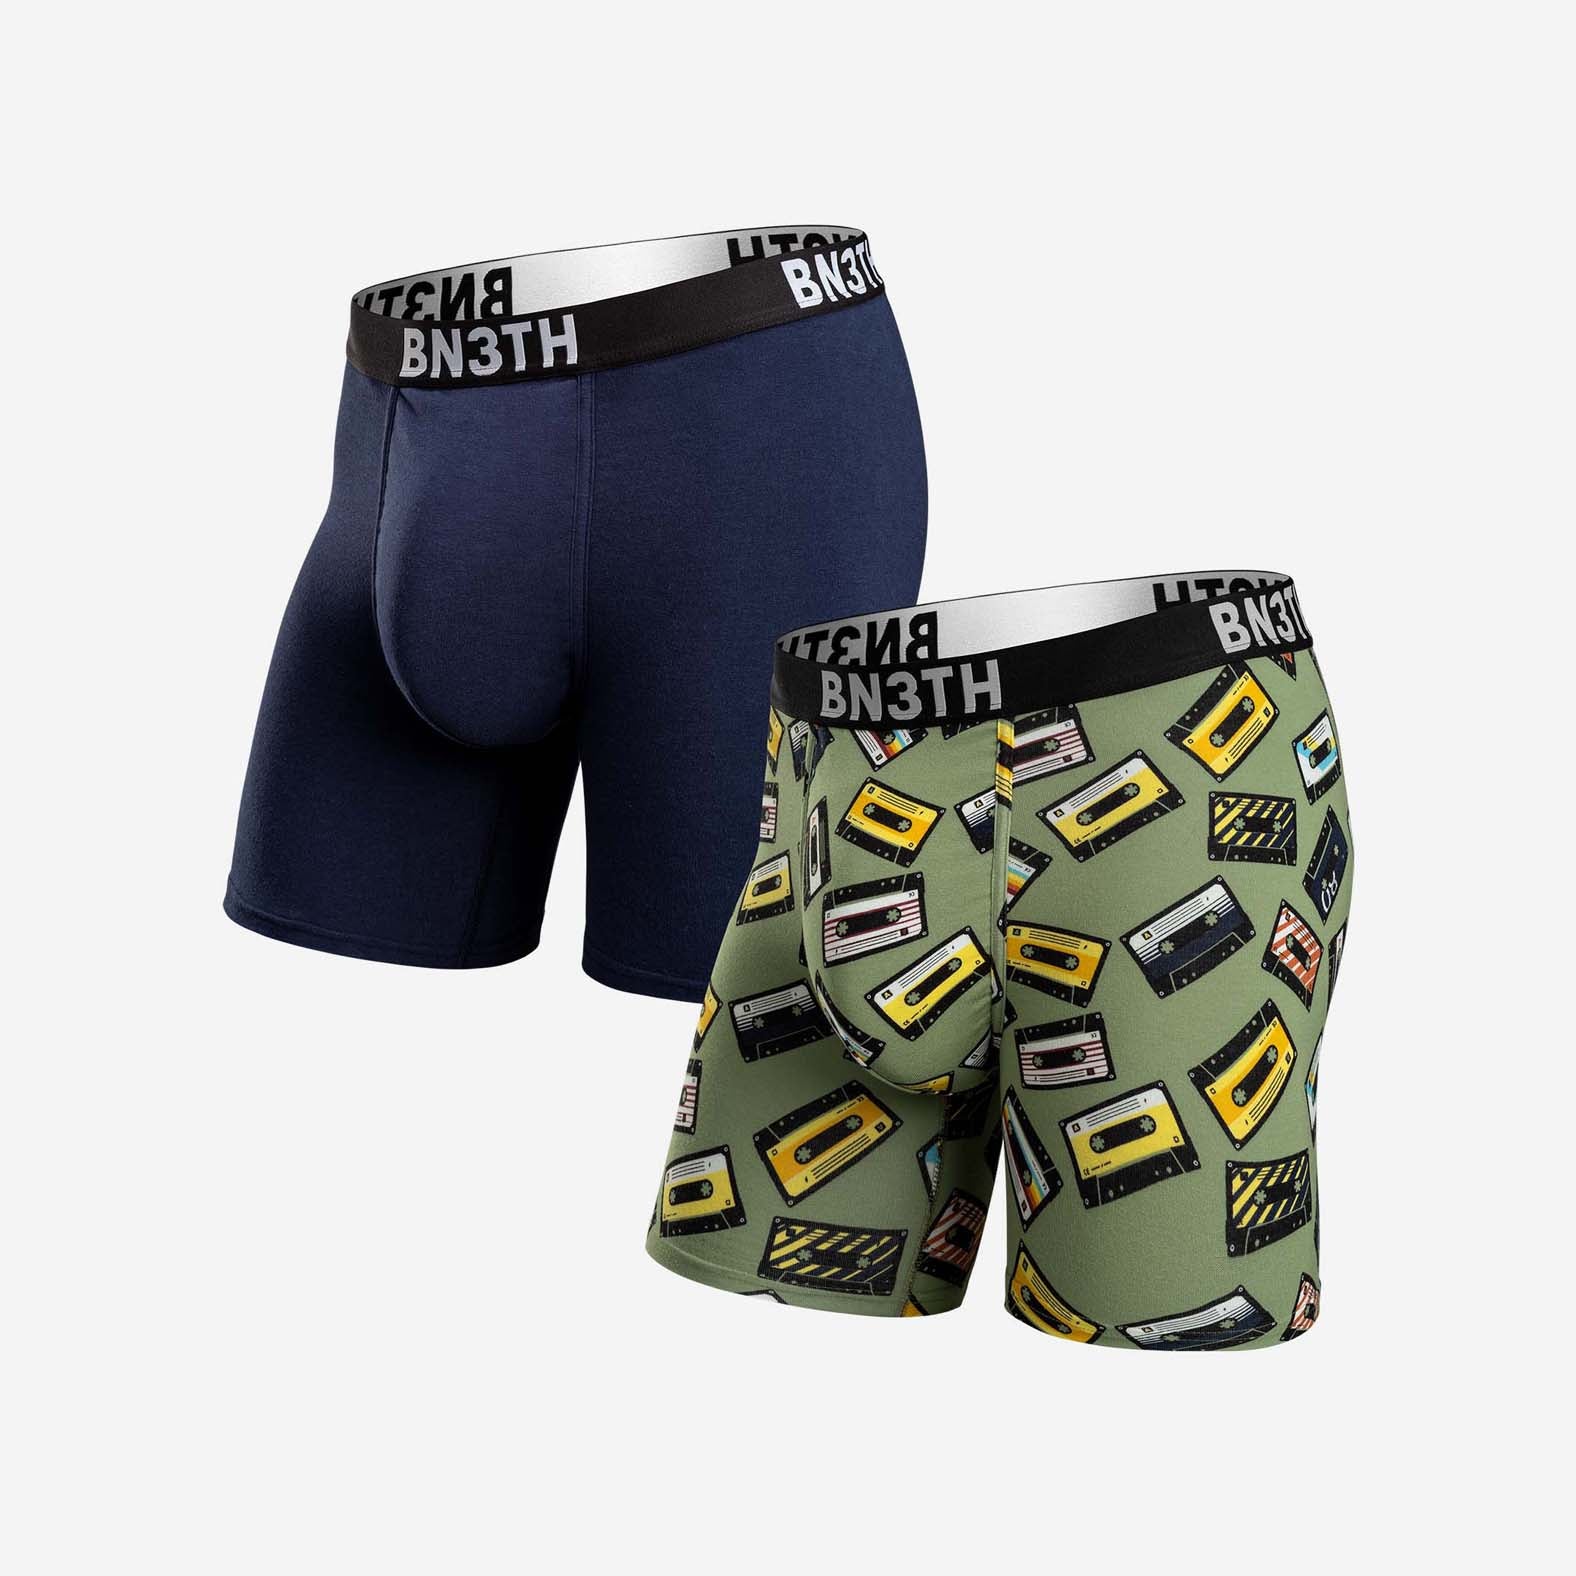 Super Hero Boxer Briefs, Soft & rad underwear for your boys